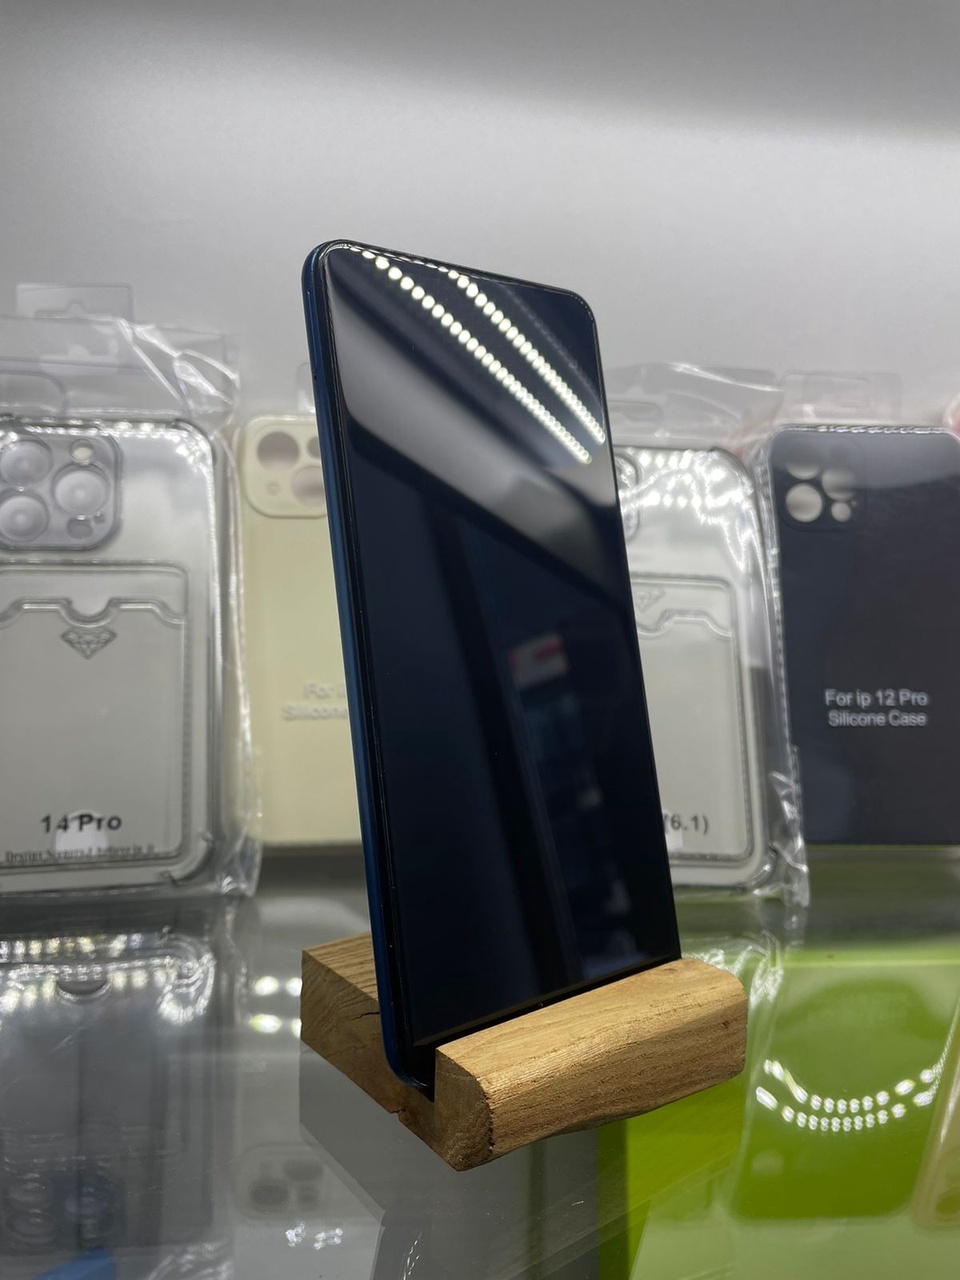 Samsung A12 на 64 Gb (Б/у) - 5 500 ₽, заказать онлайн.